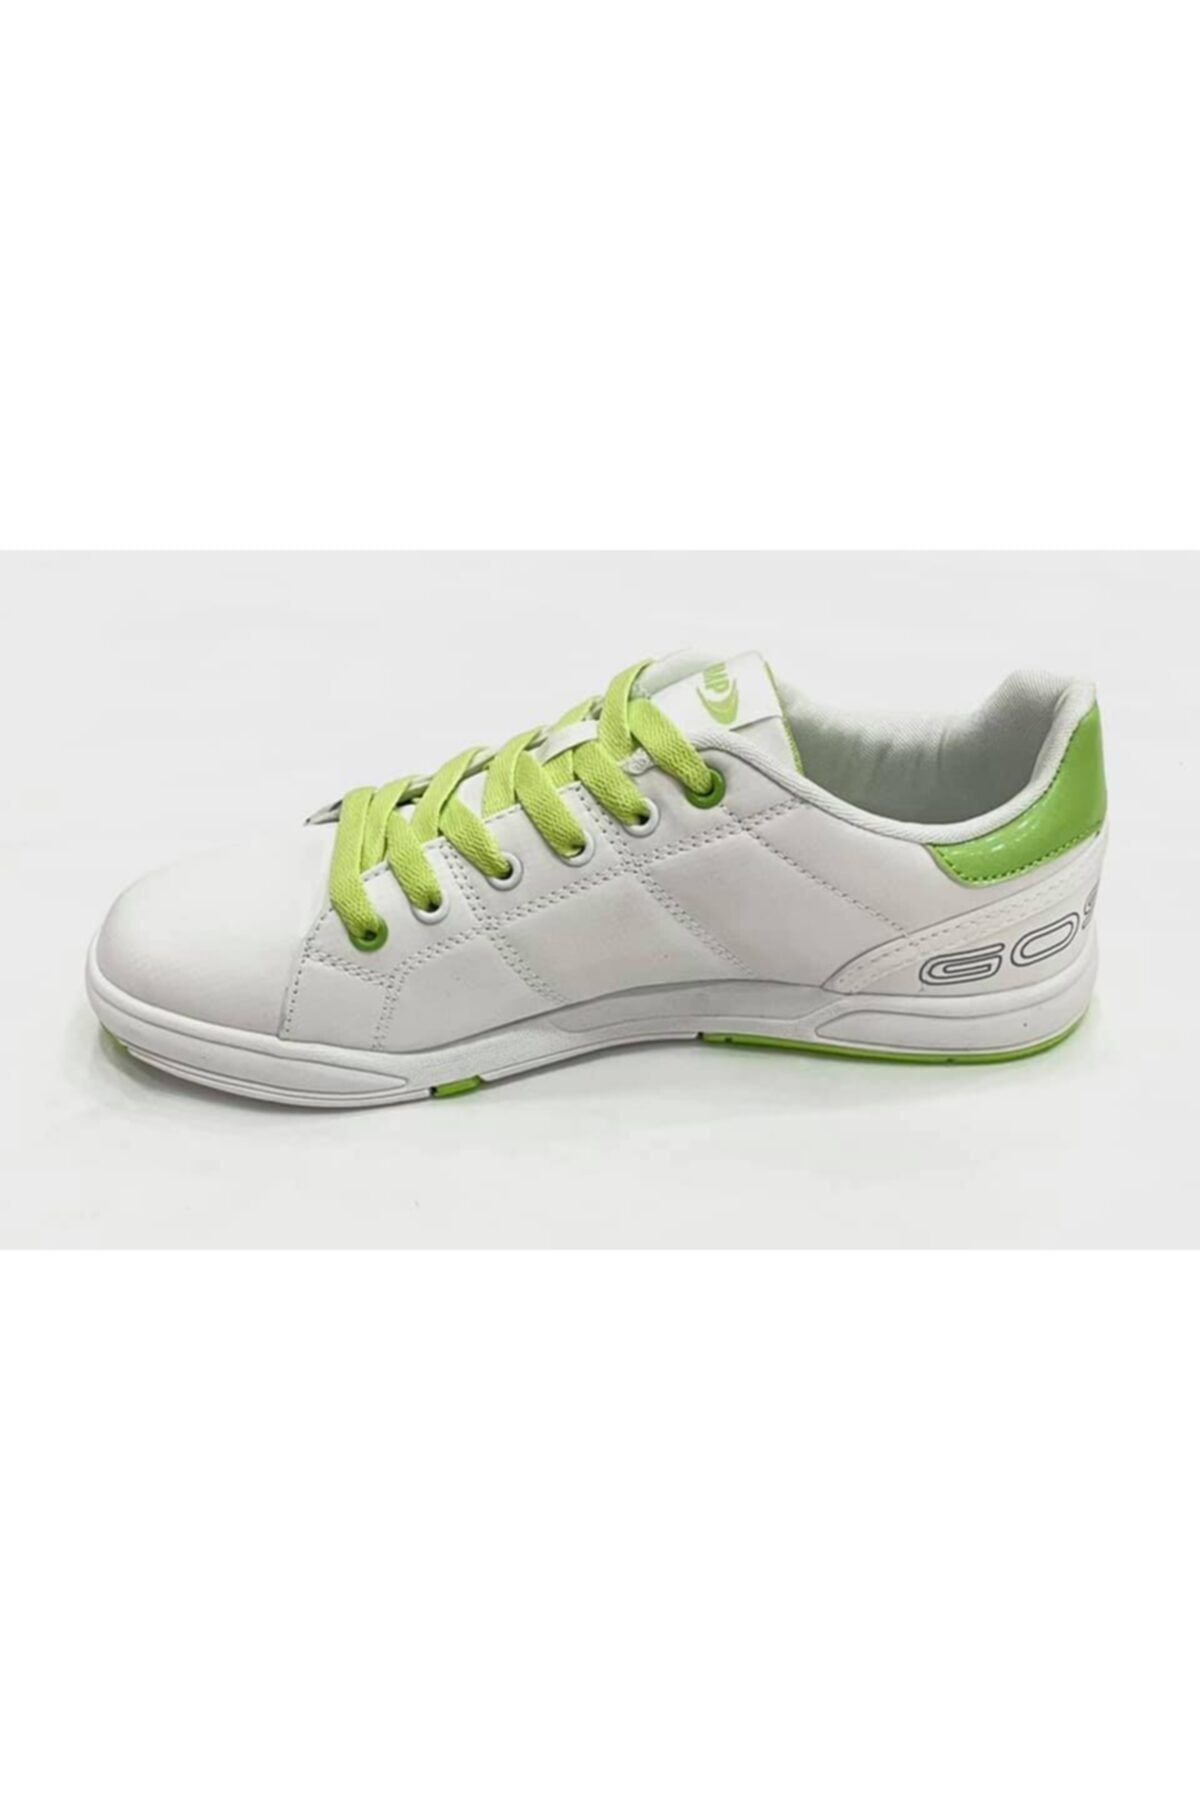 Jump کفش ورزشی یونیسکس سفید سبز